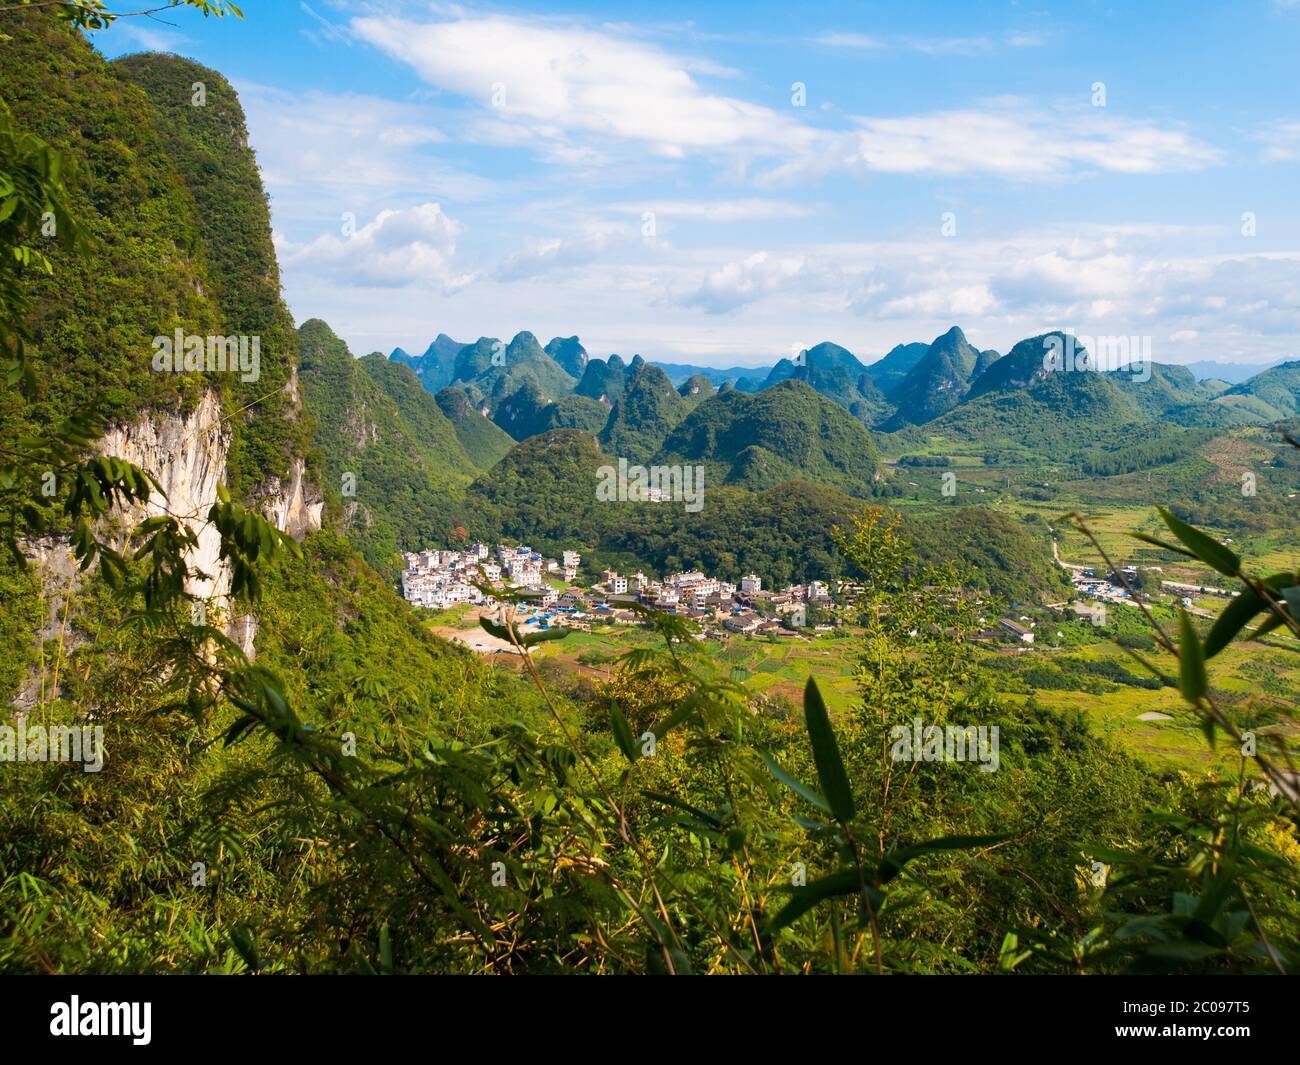 Karst mountain landscape near Yangshuo, Guilin, China Stock Photo